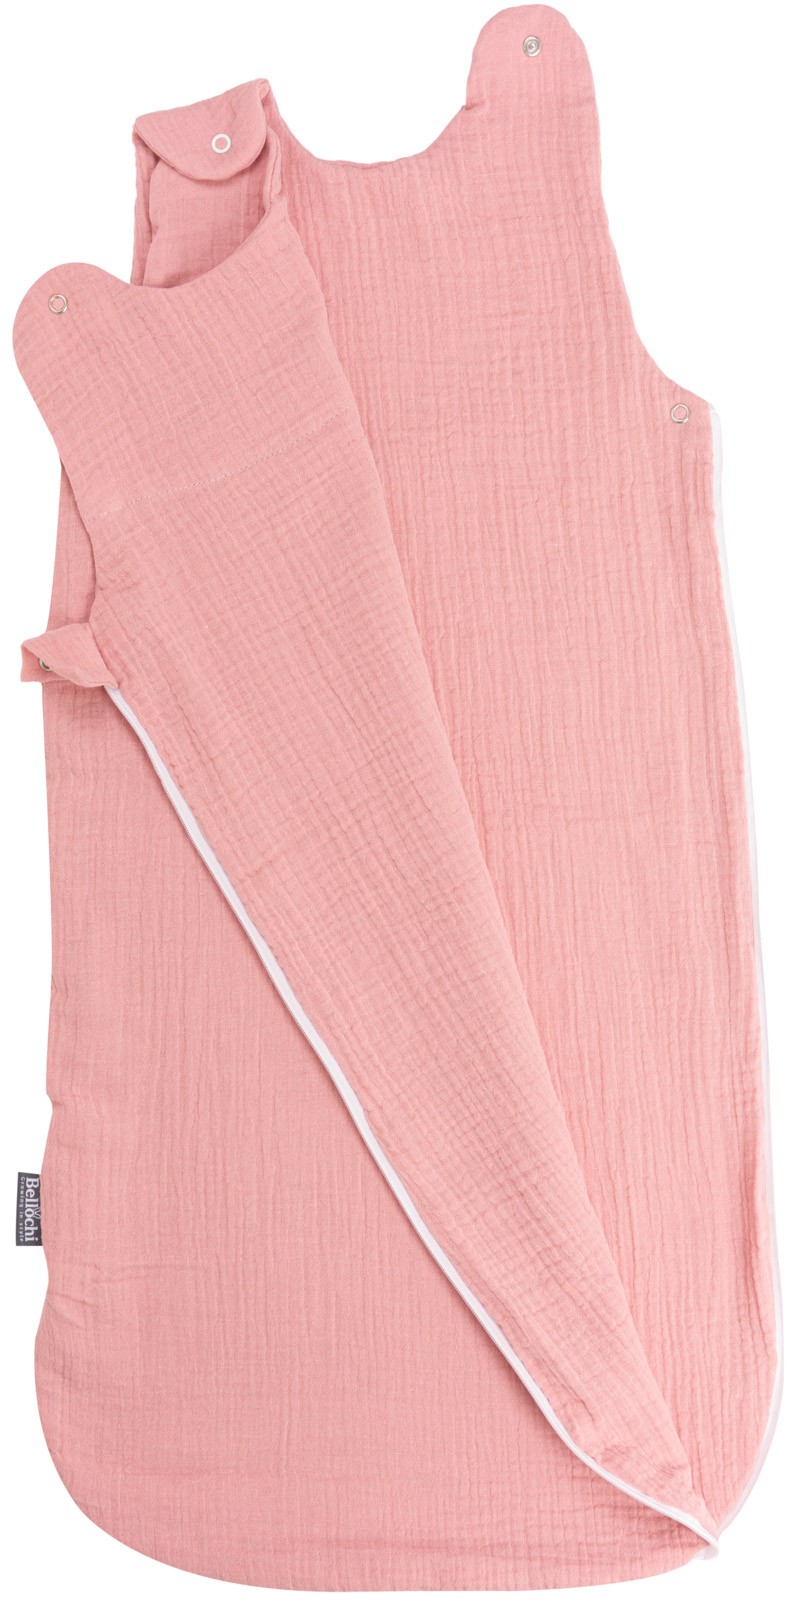 Baby sleeping bag TOG 1.0 (summer) Cuddly Muslin Pink